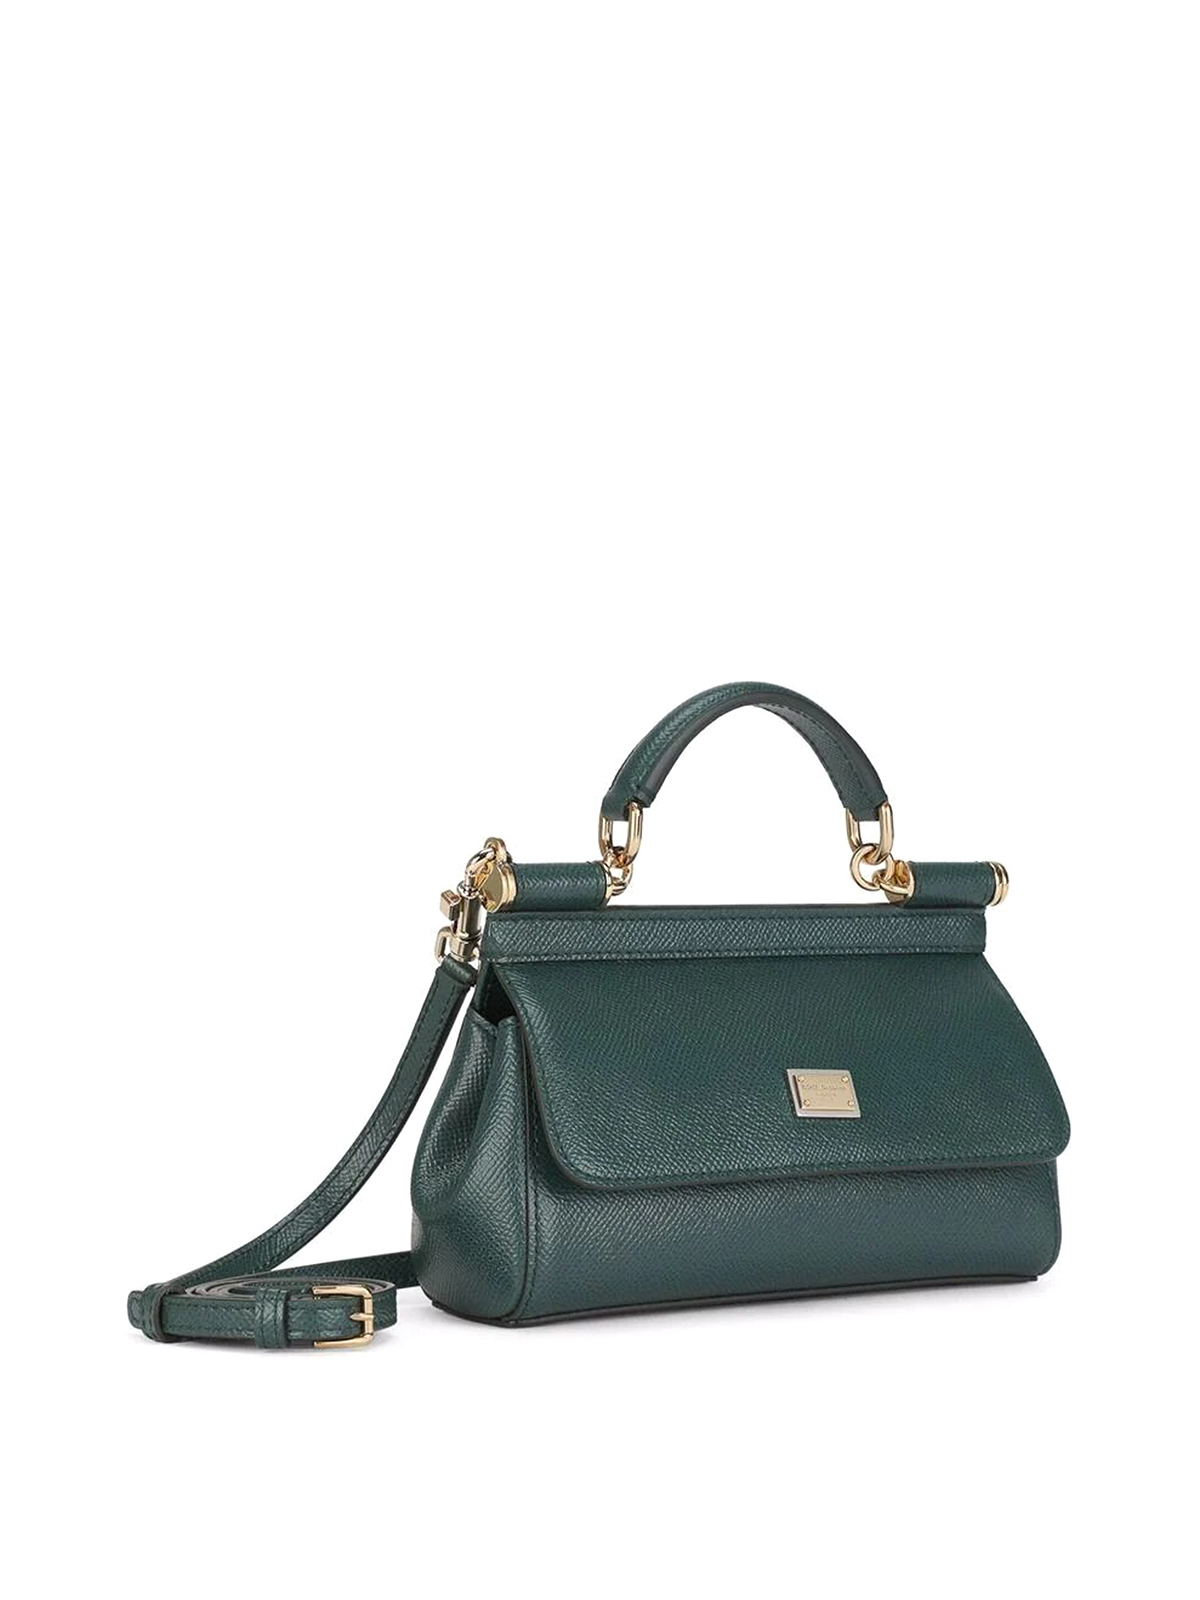 Dauphine leather handbag